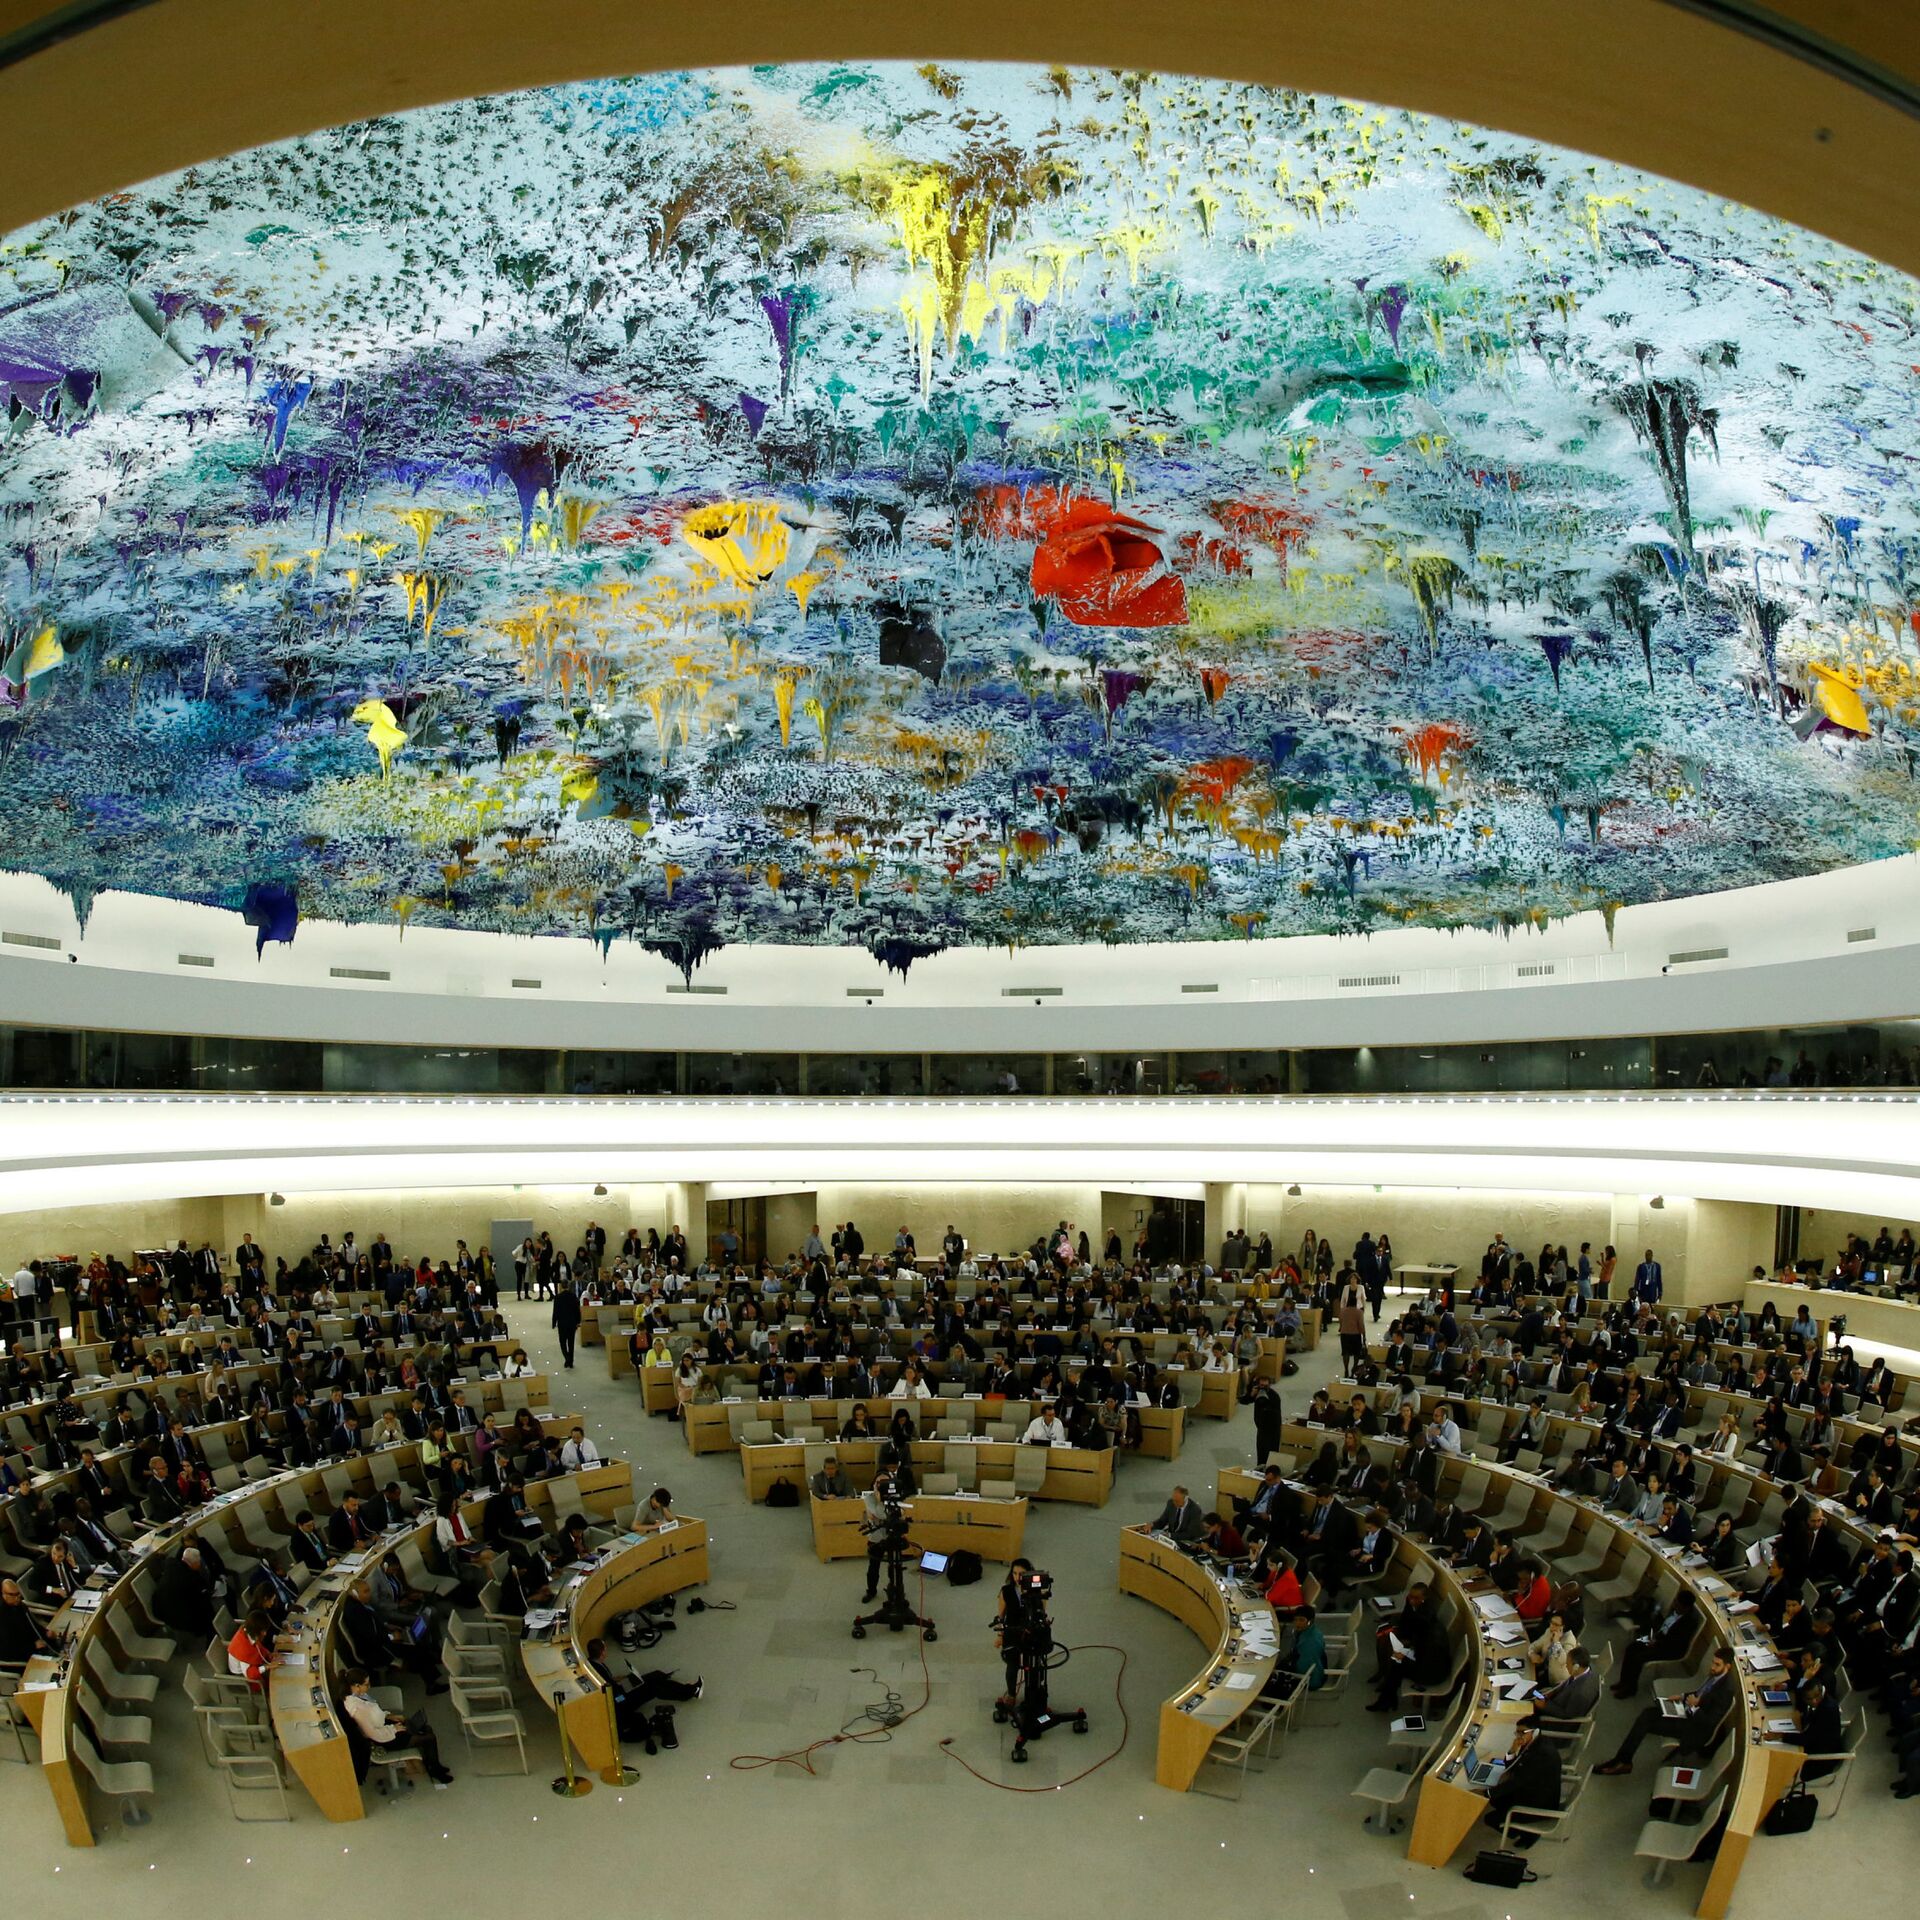 2022 год оон. Совет по правам человека ООН. Панно в зале ООН. Дворец наций в Женеве. Зал заседаний ООН фреска.